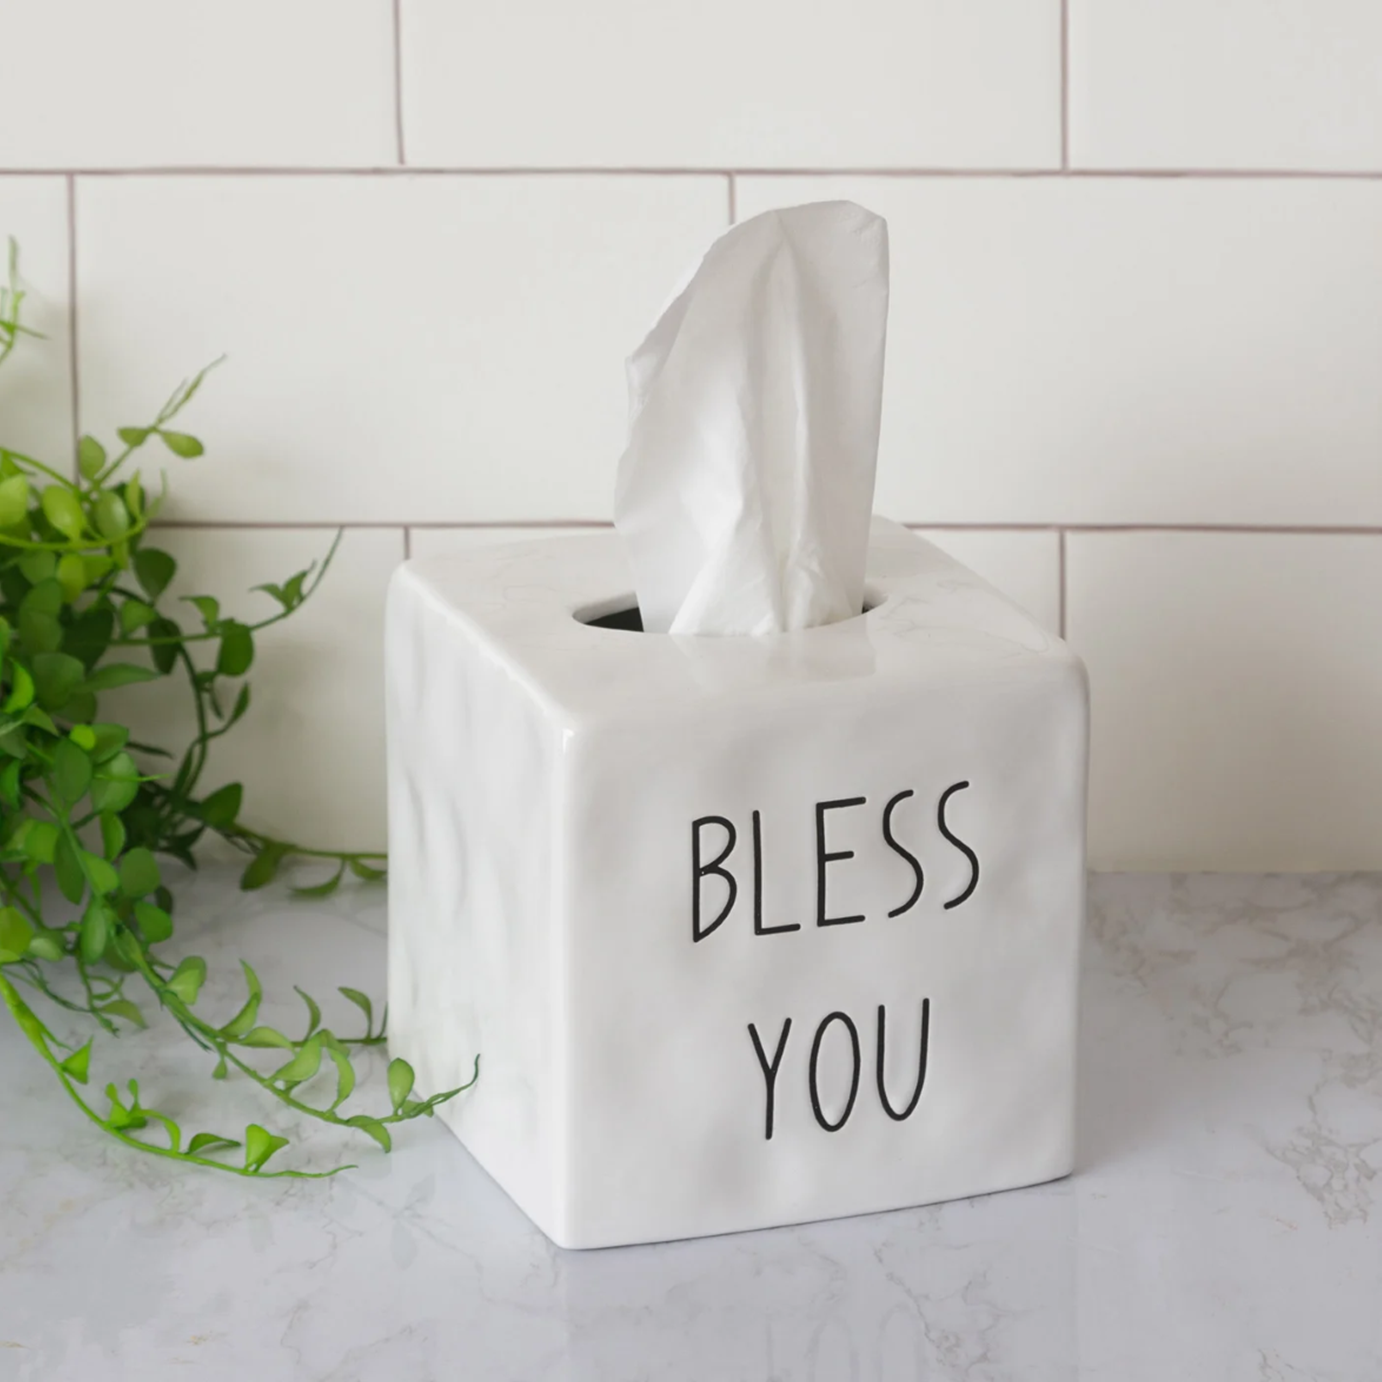 Bless You Ceramic Tissue Box Cover